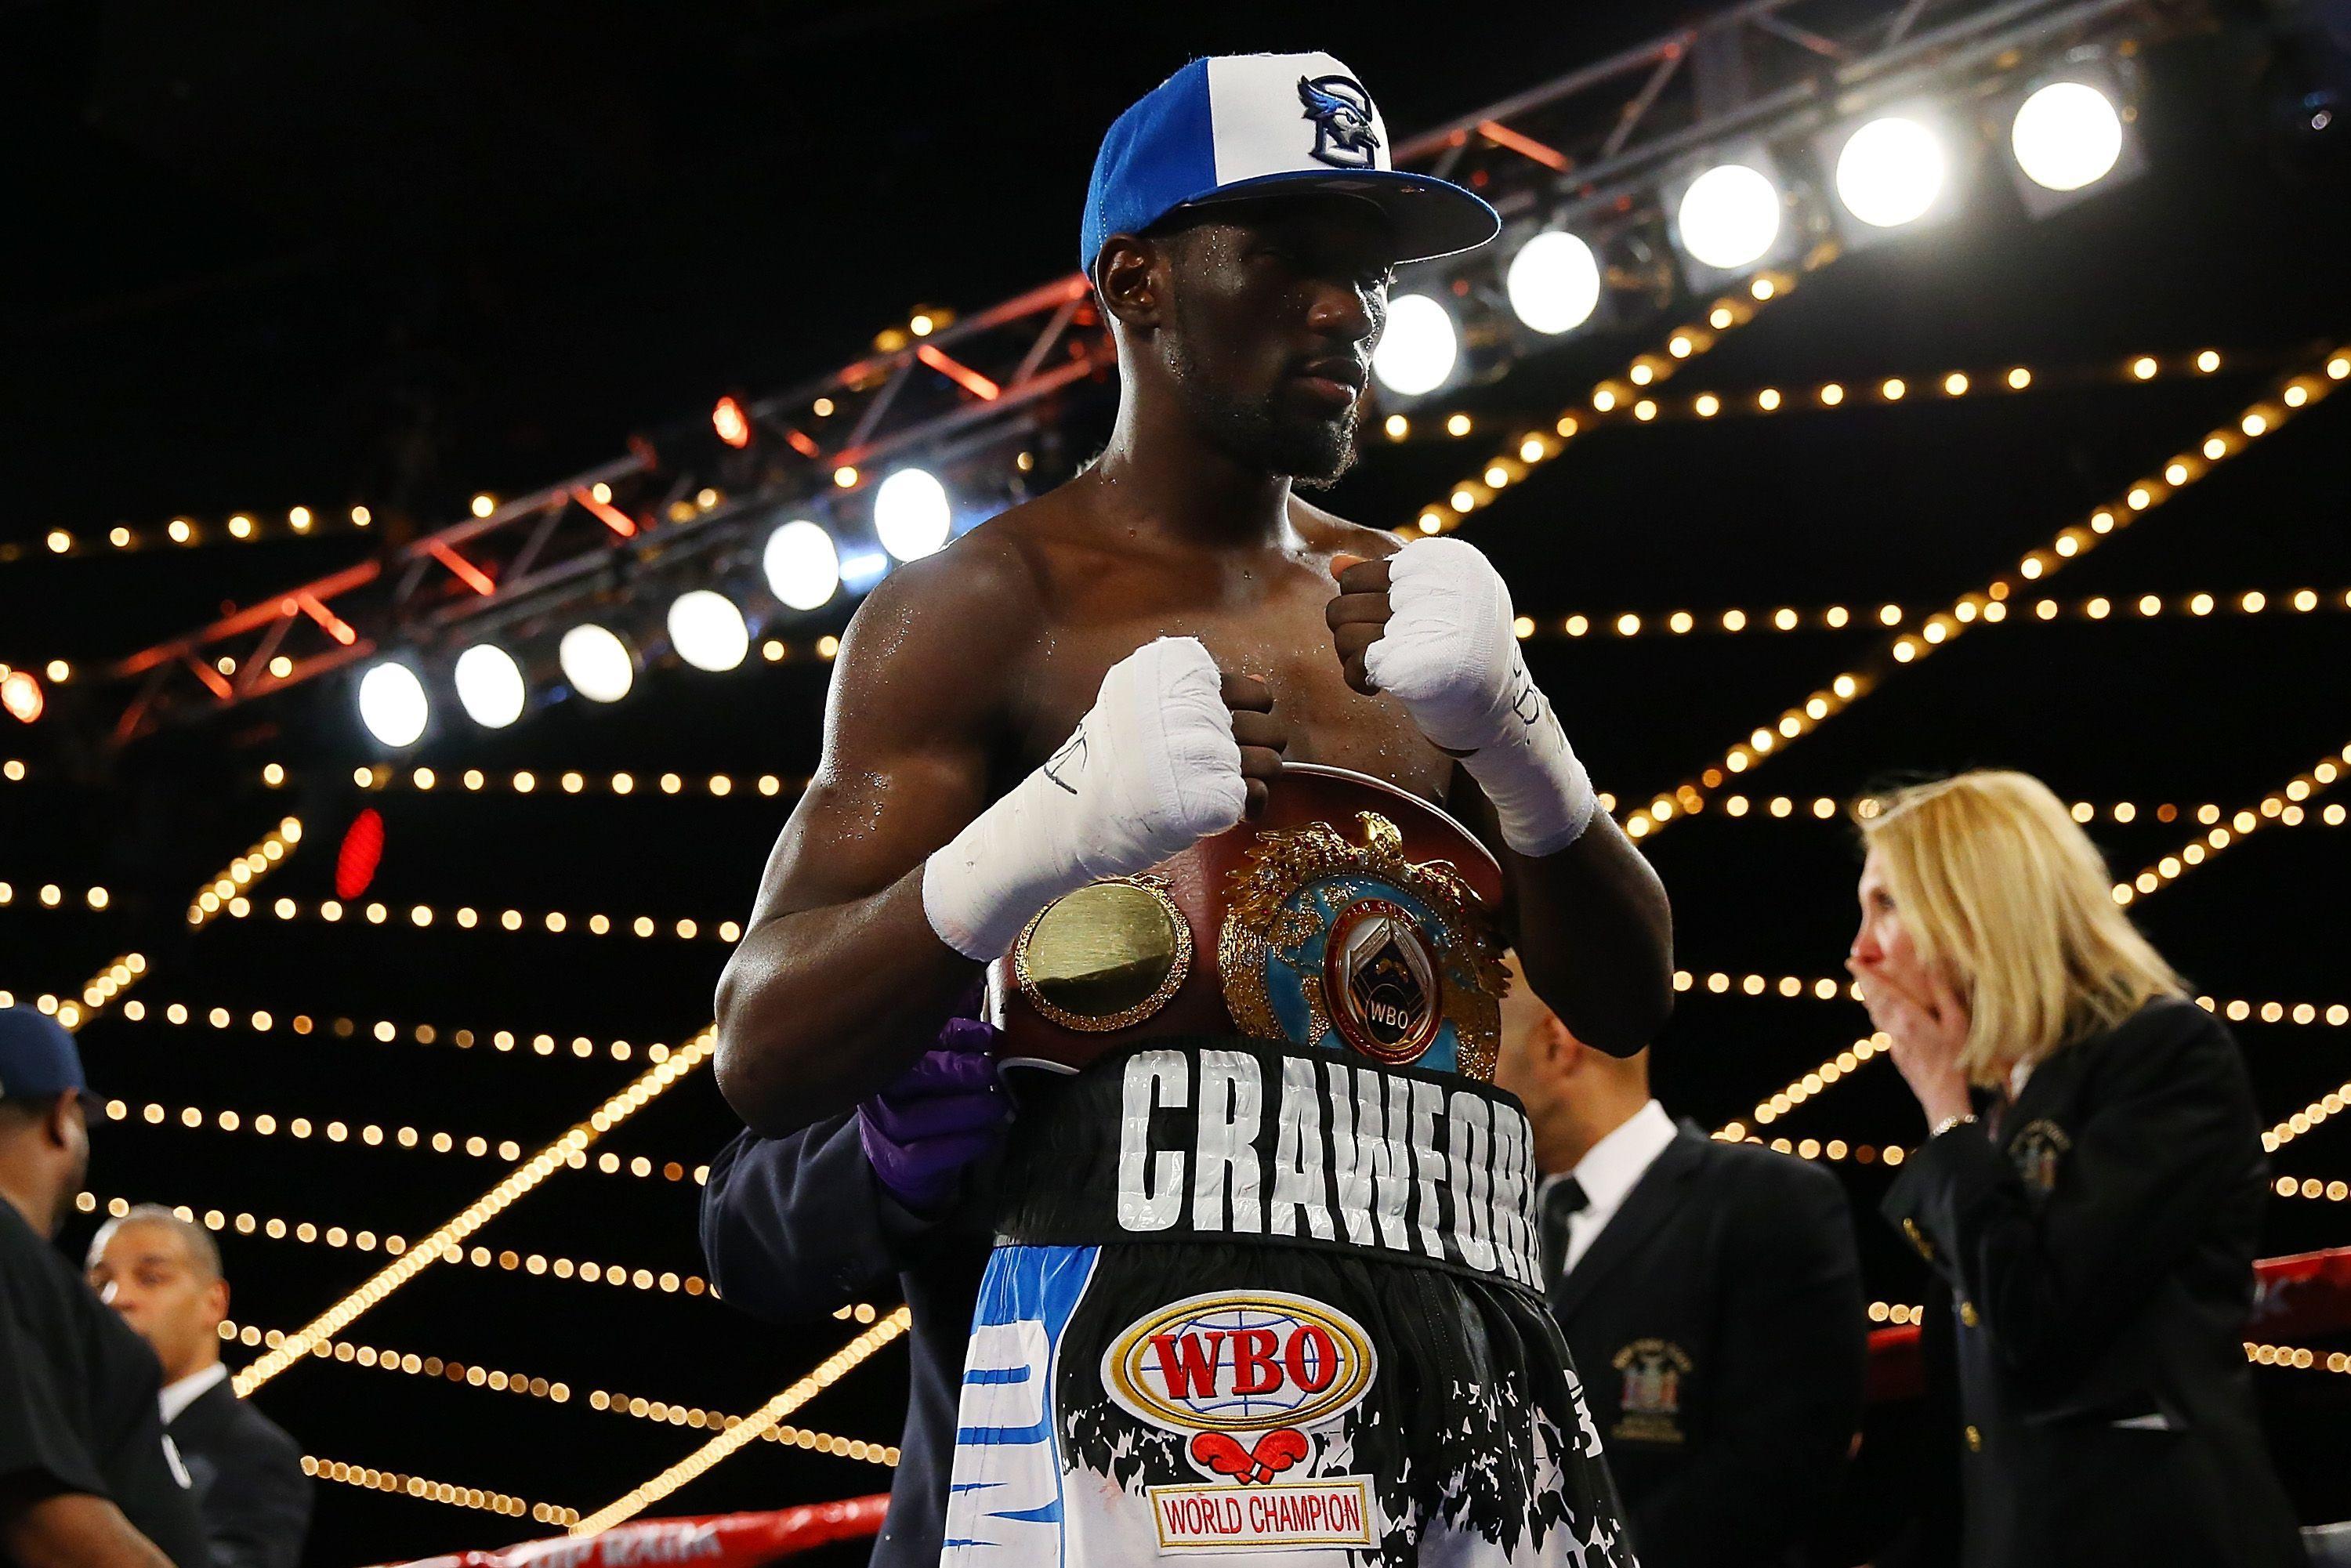 HBO PPV boxing preview: Terence Crawford vs Viktor Postol